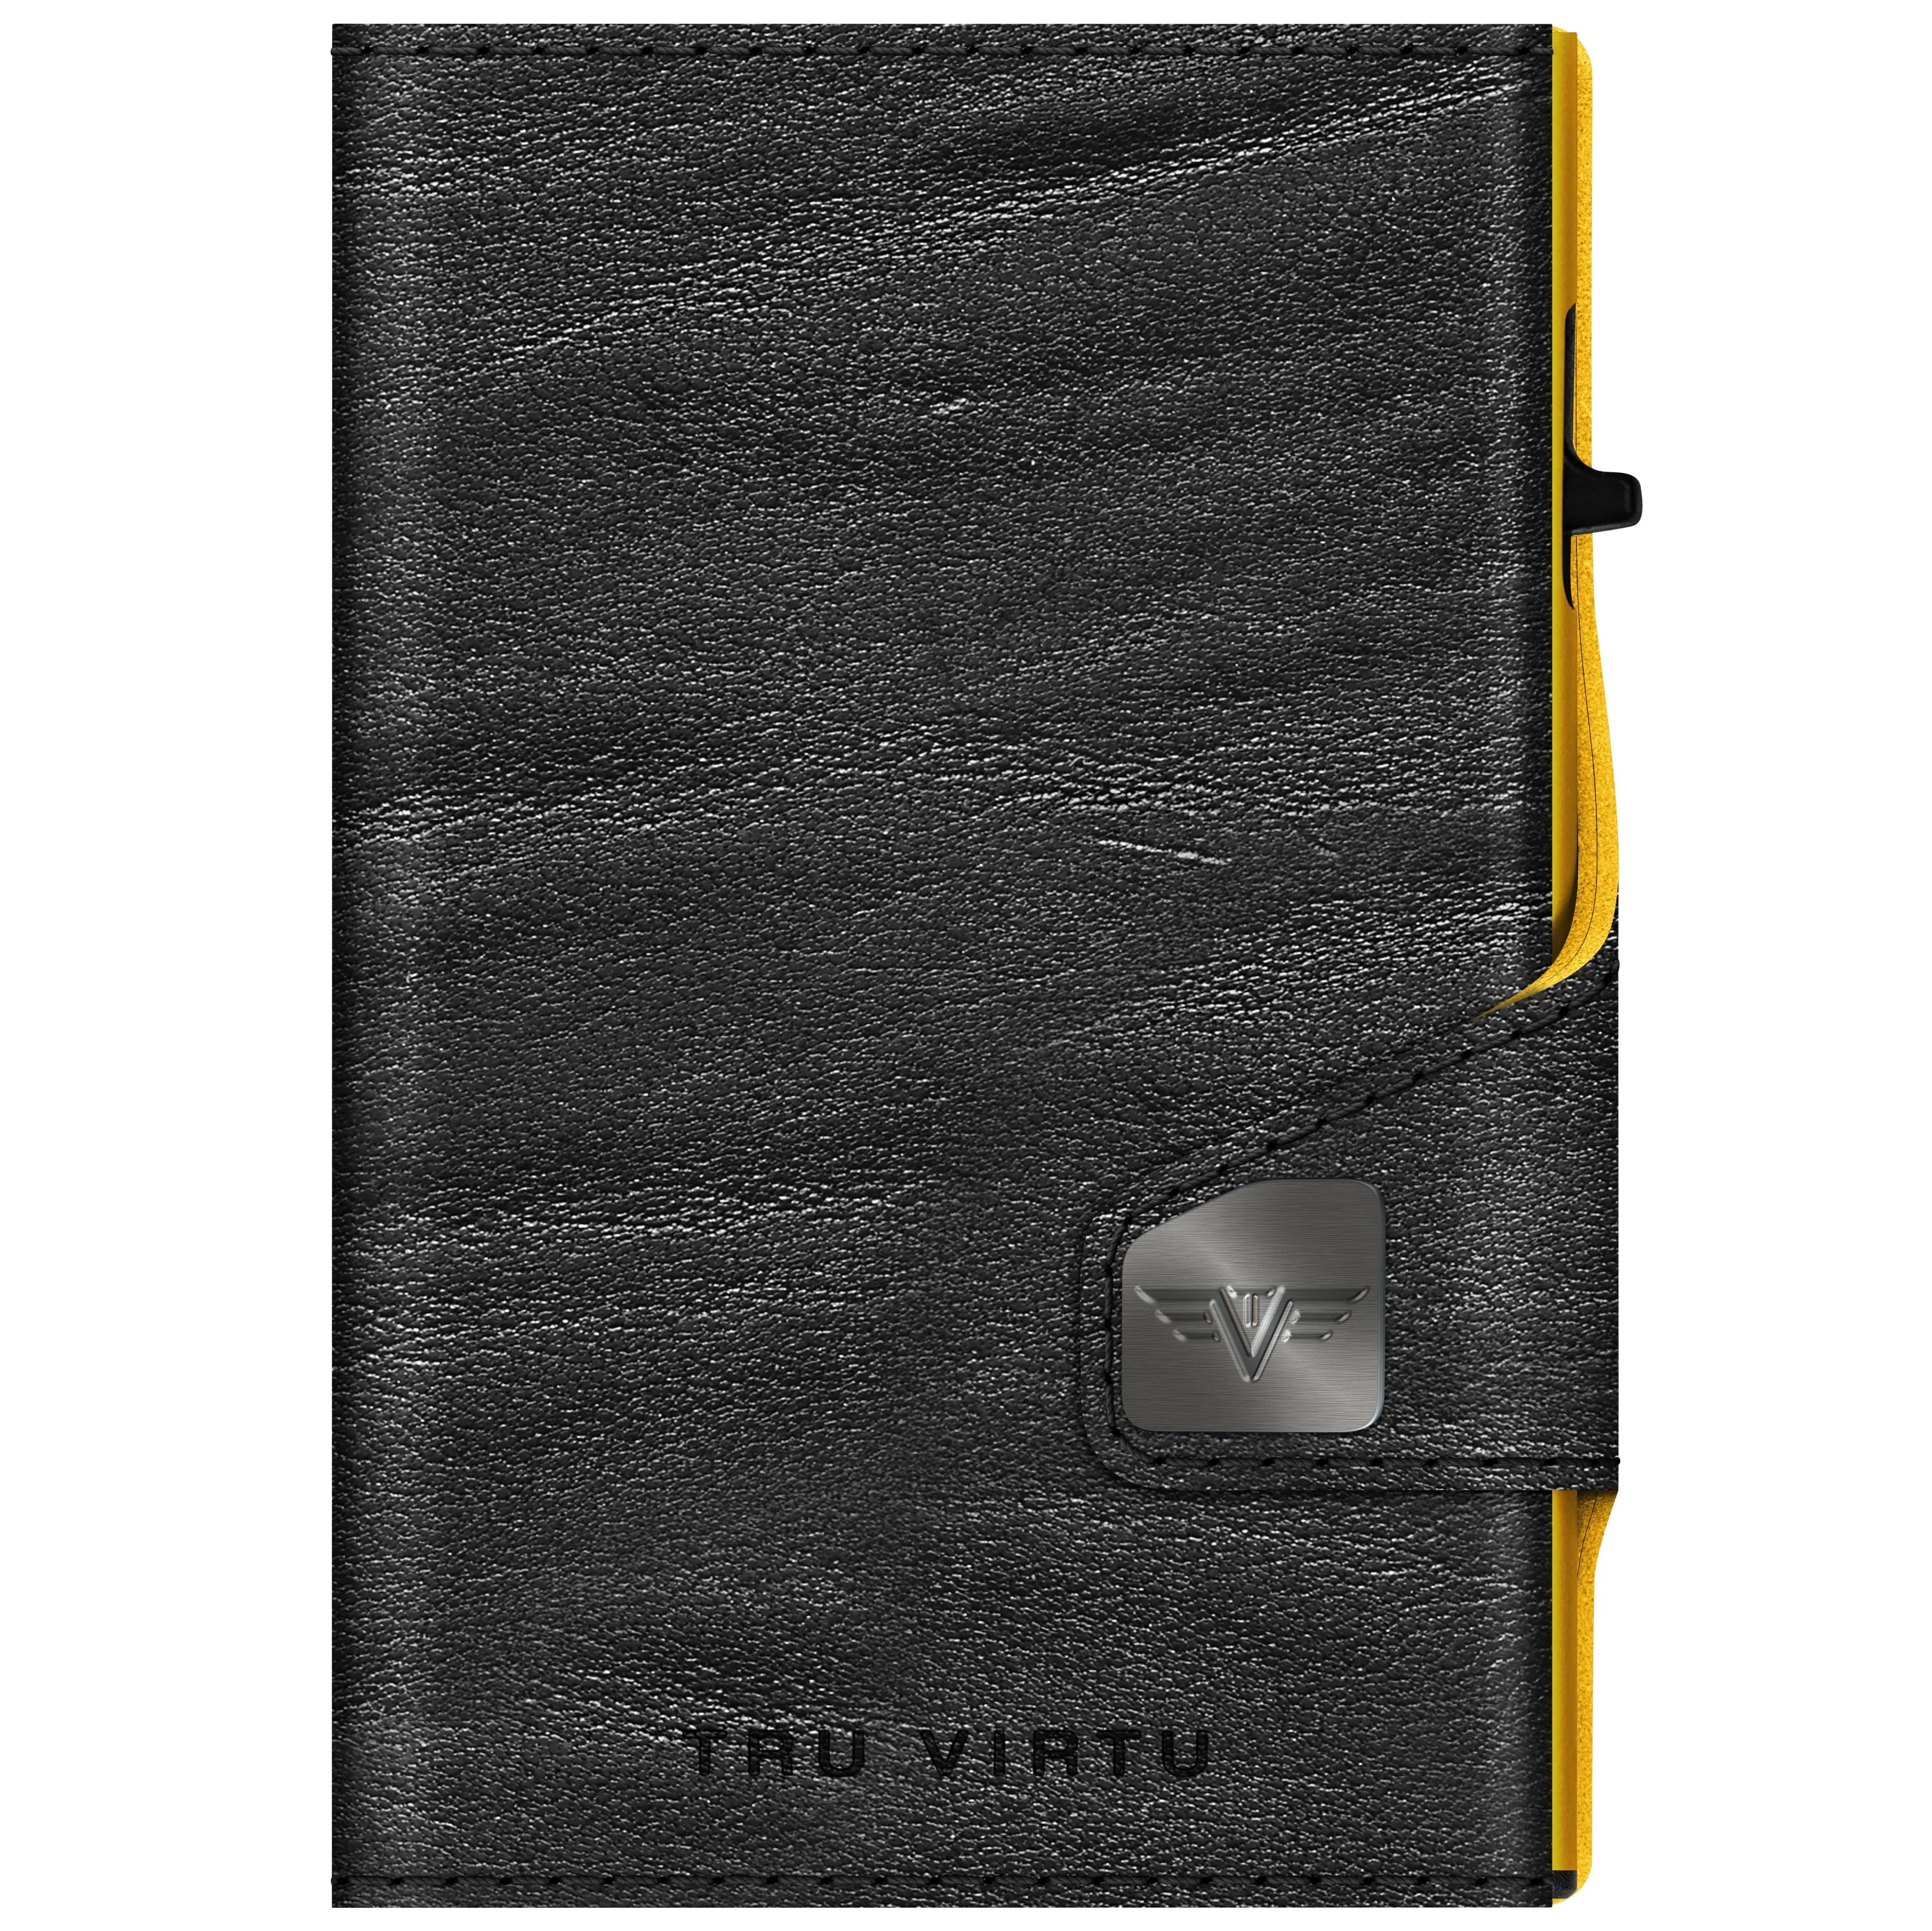 Tru Virtu Special Edition Click & Slide Caramba wallet 10 cm - Black-Yell/Gold